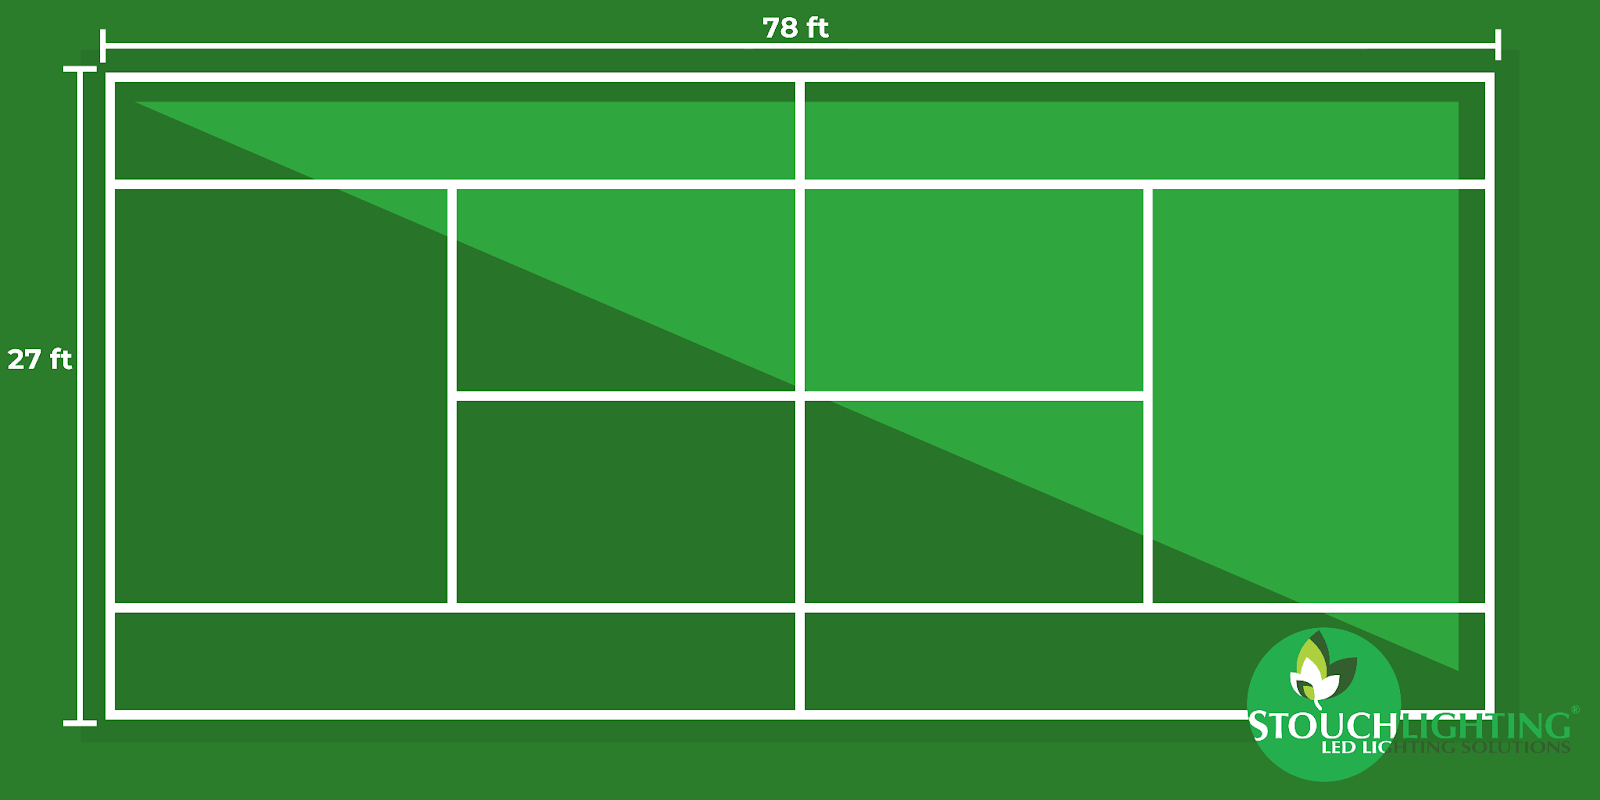 Singles tennis court dimensions